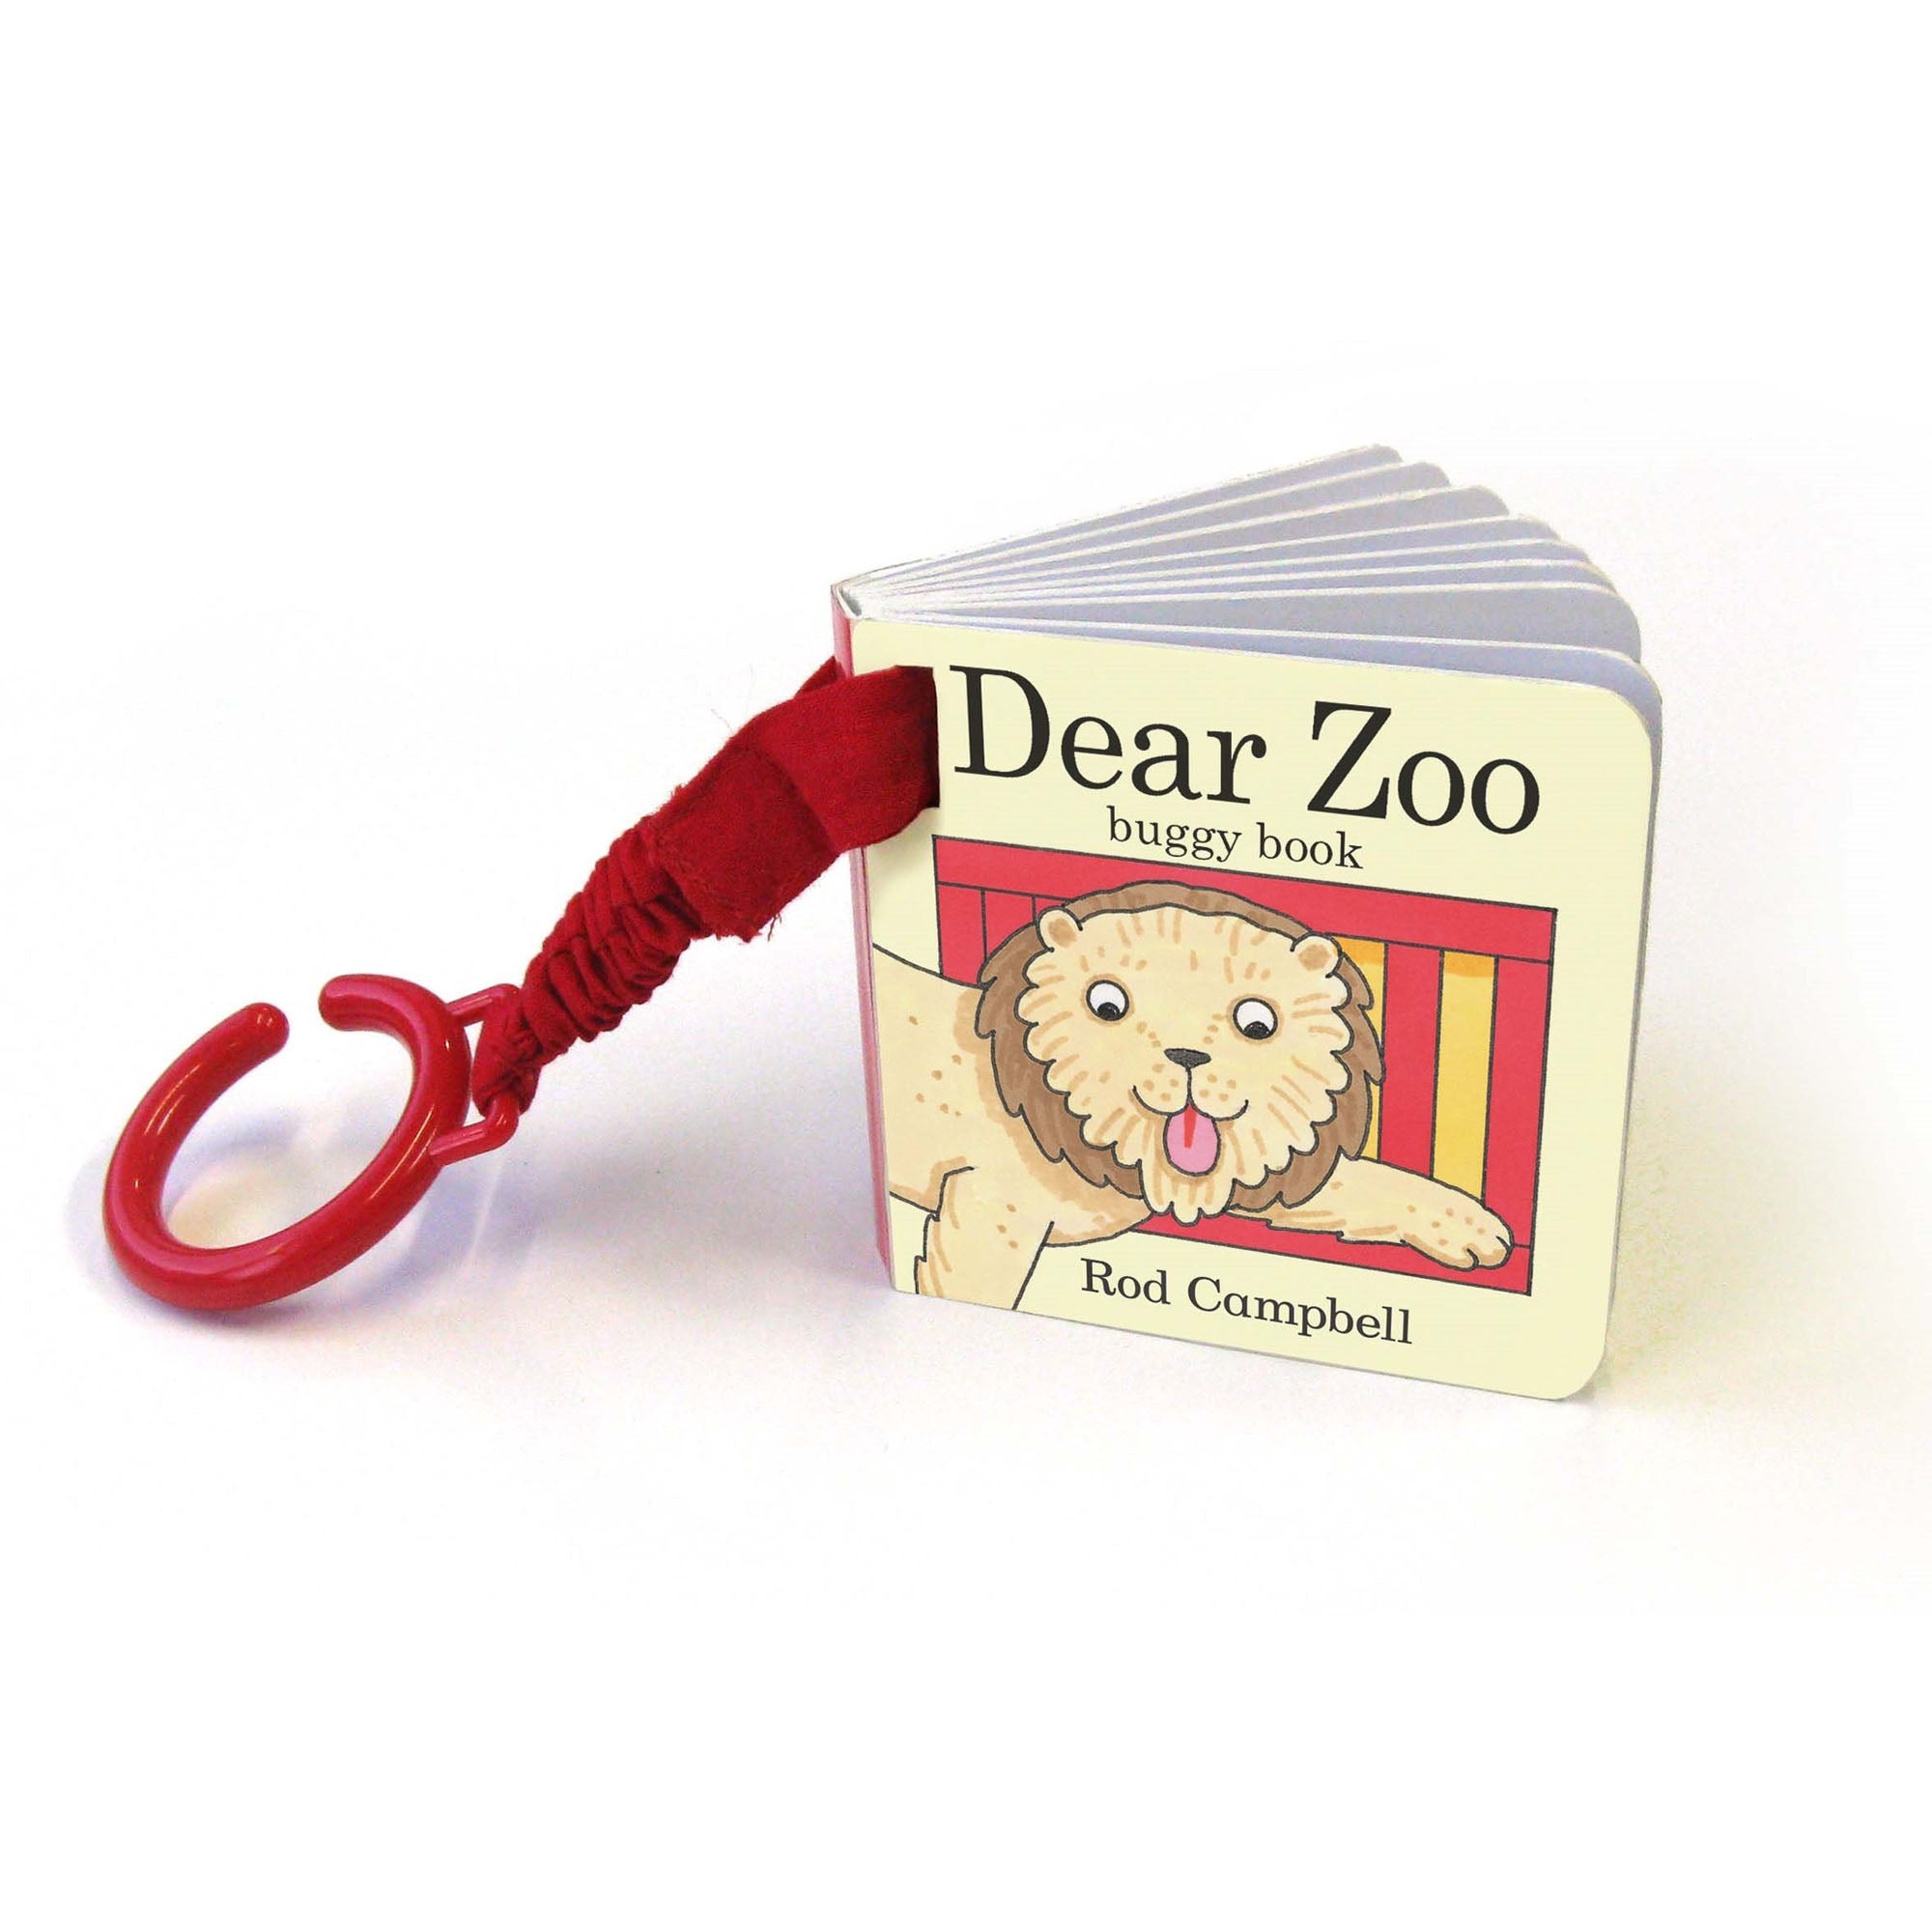 Dear zoo buggy book (Lion)